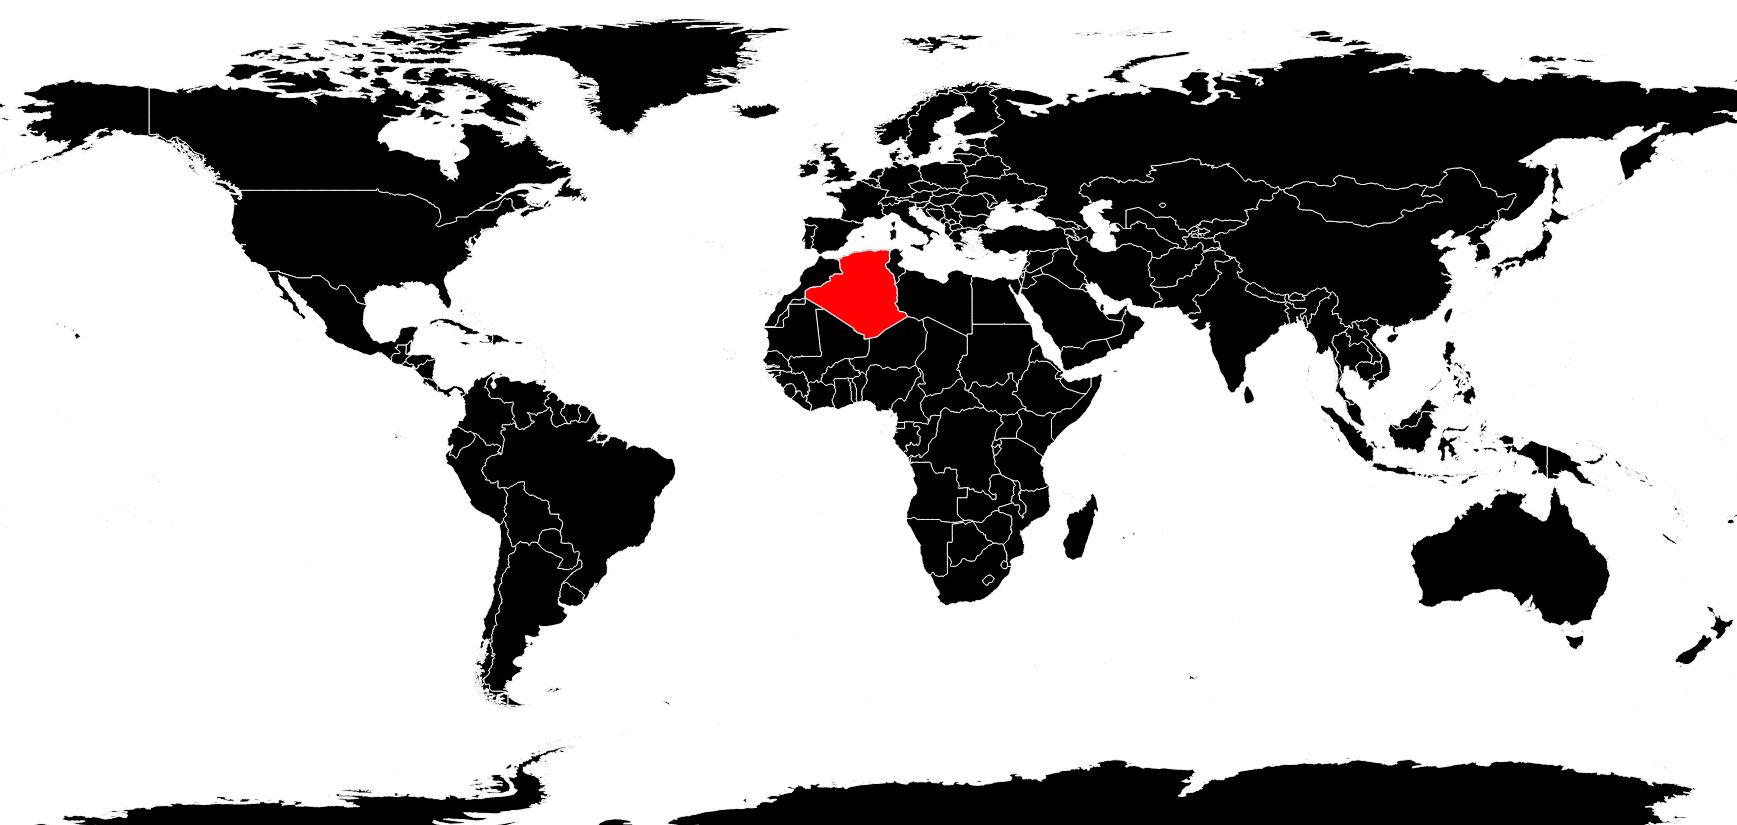 algerie carte du monde